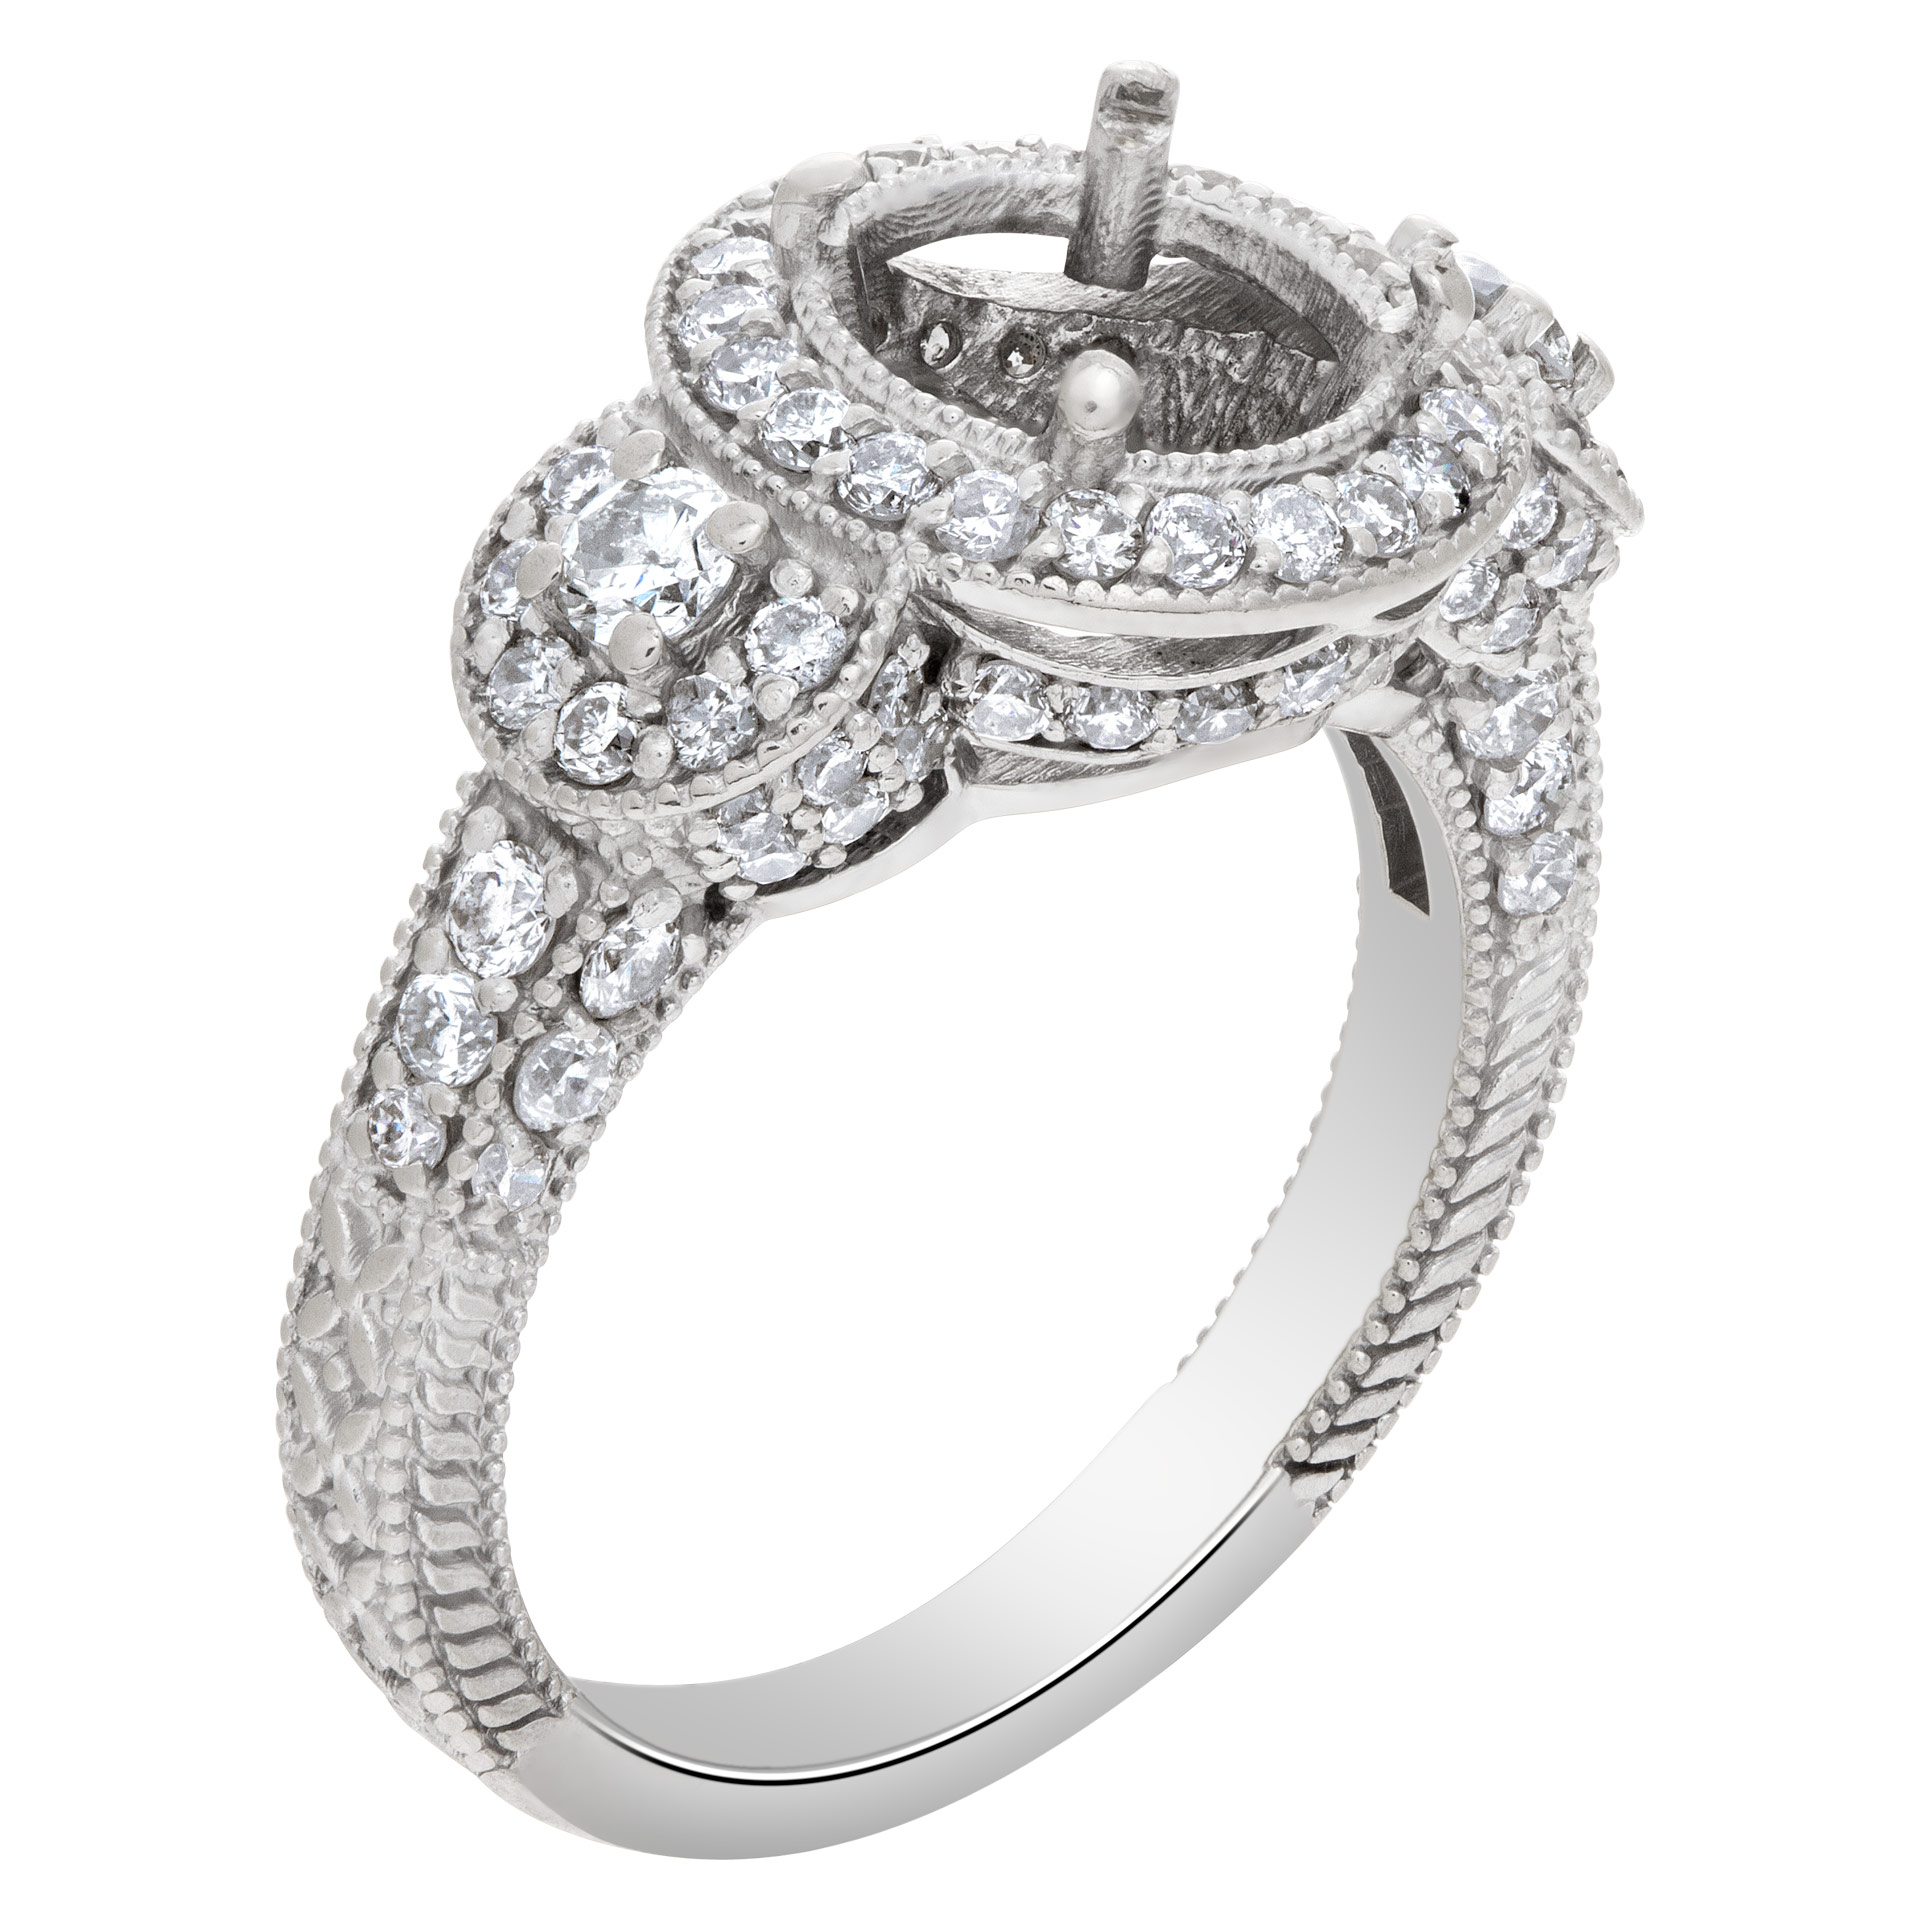 Beautiful diamond setting with approximately 1 carat full cut round brilliant diamonds, set in 14k white gold image 3